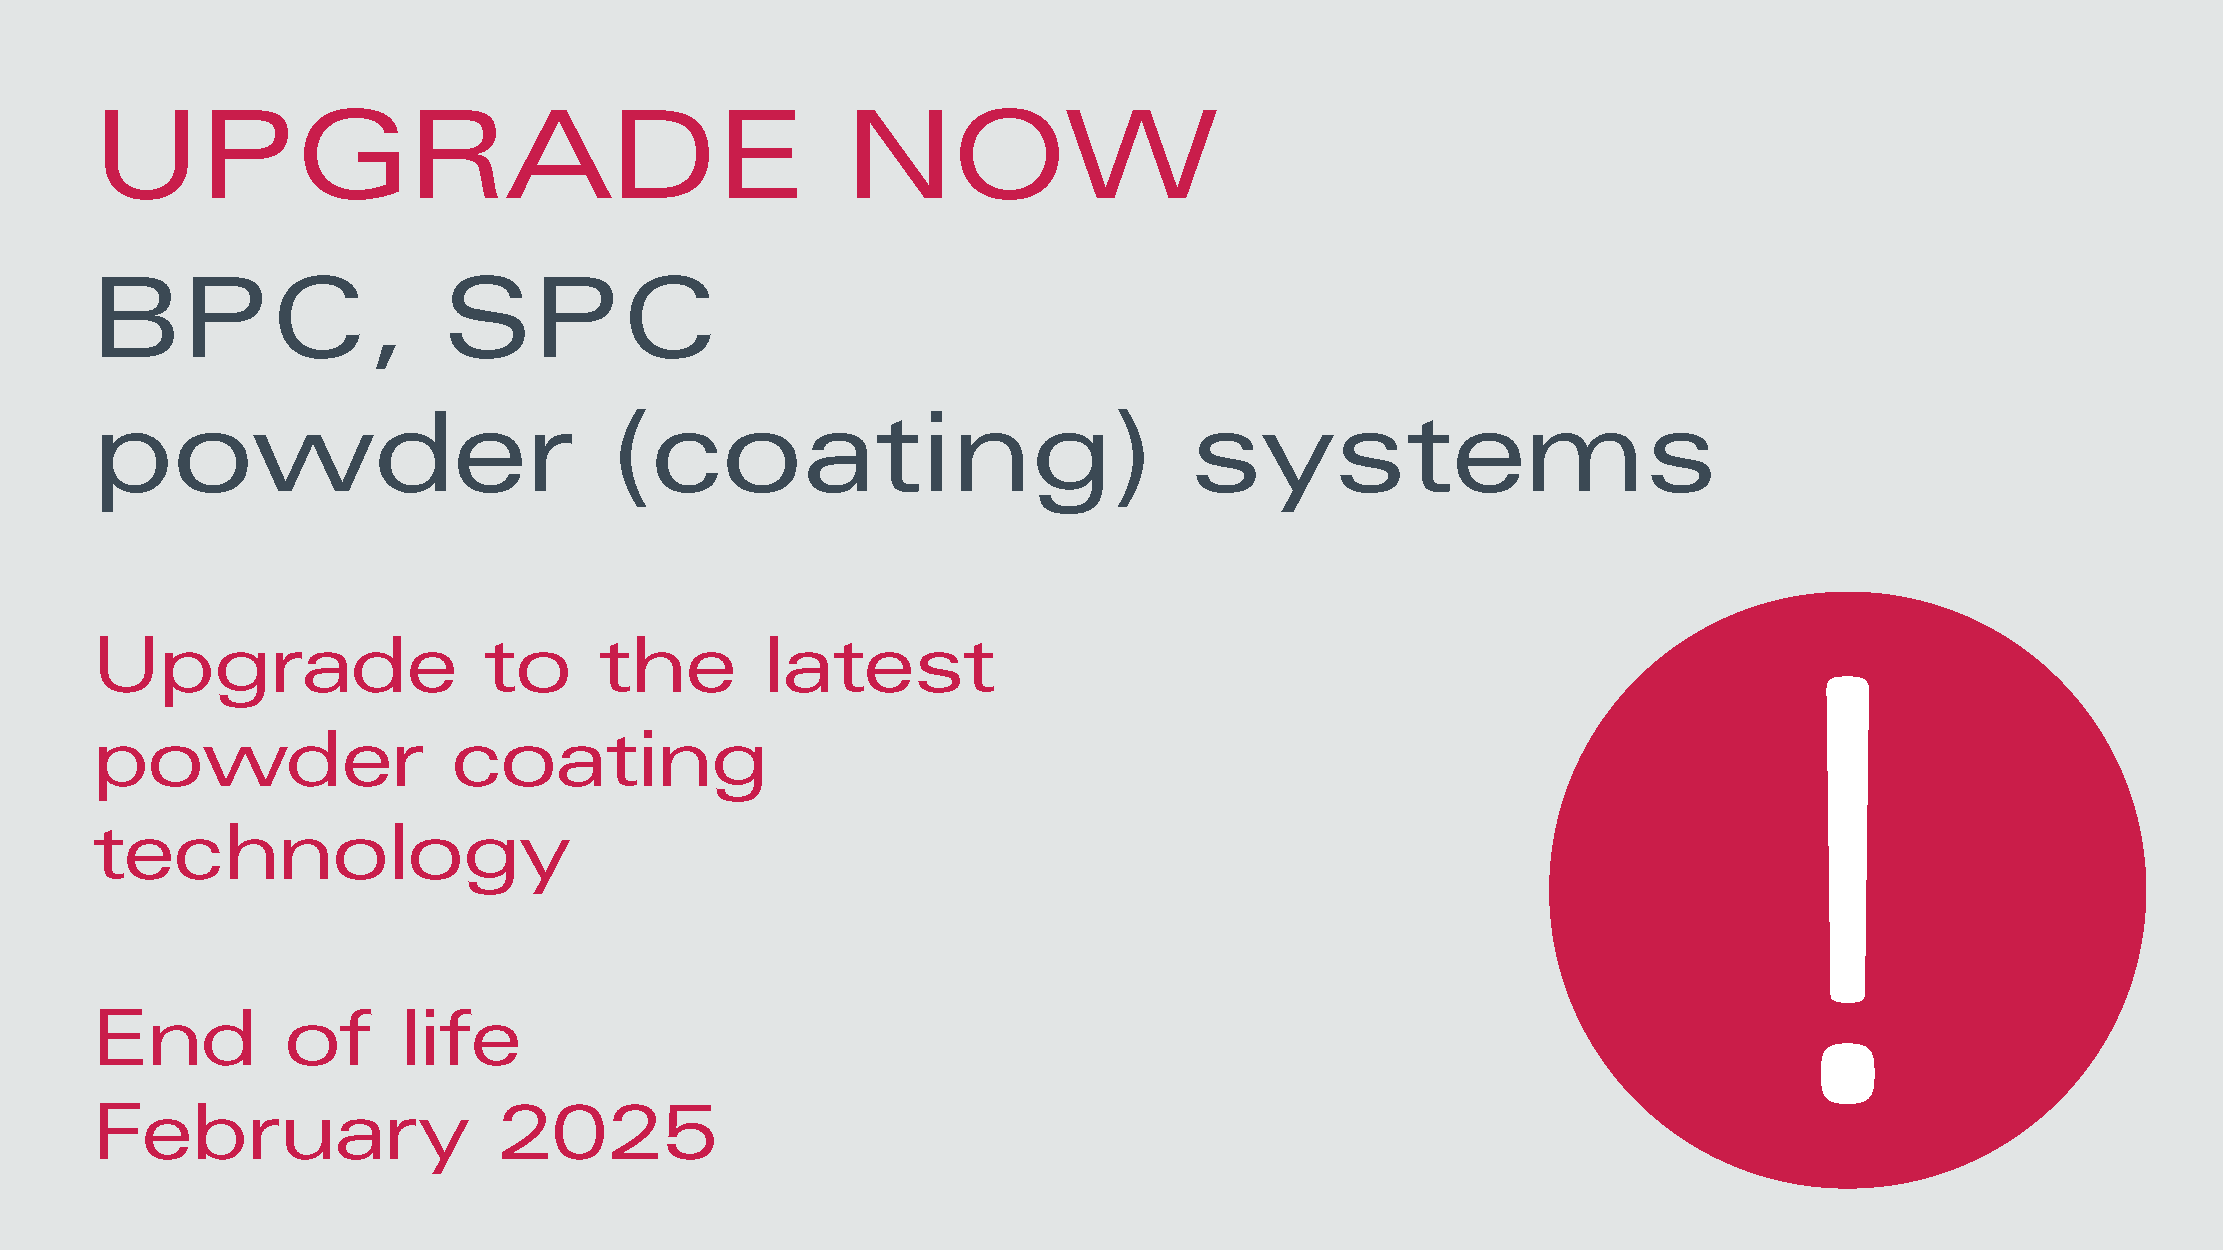 BPC, SPC powder (coating) systems